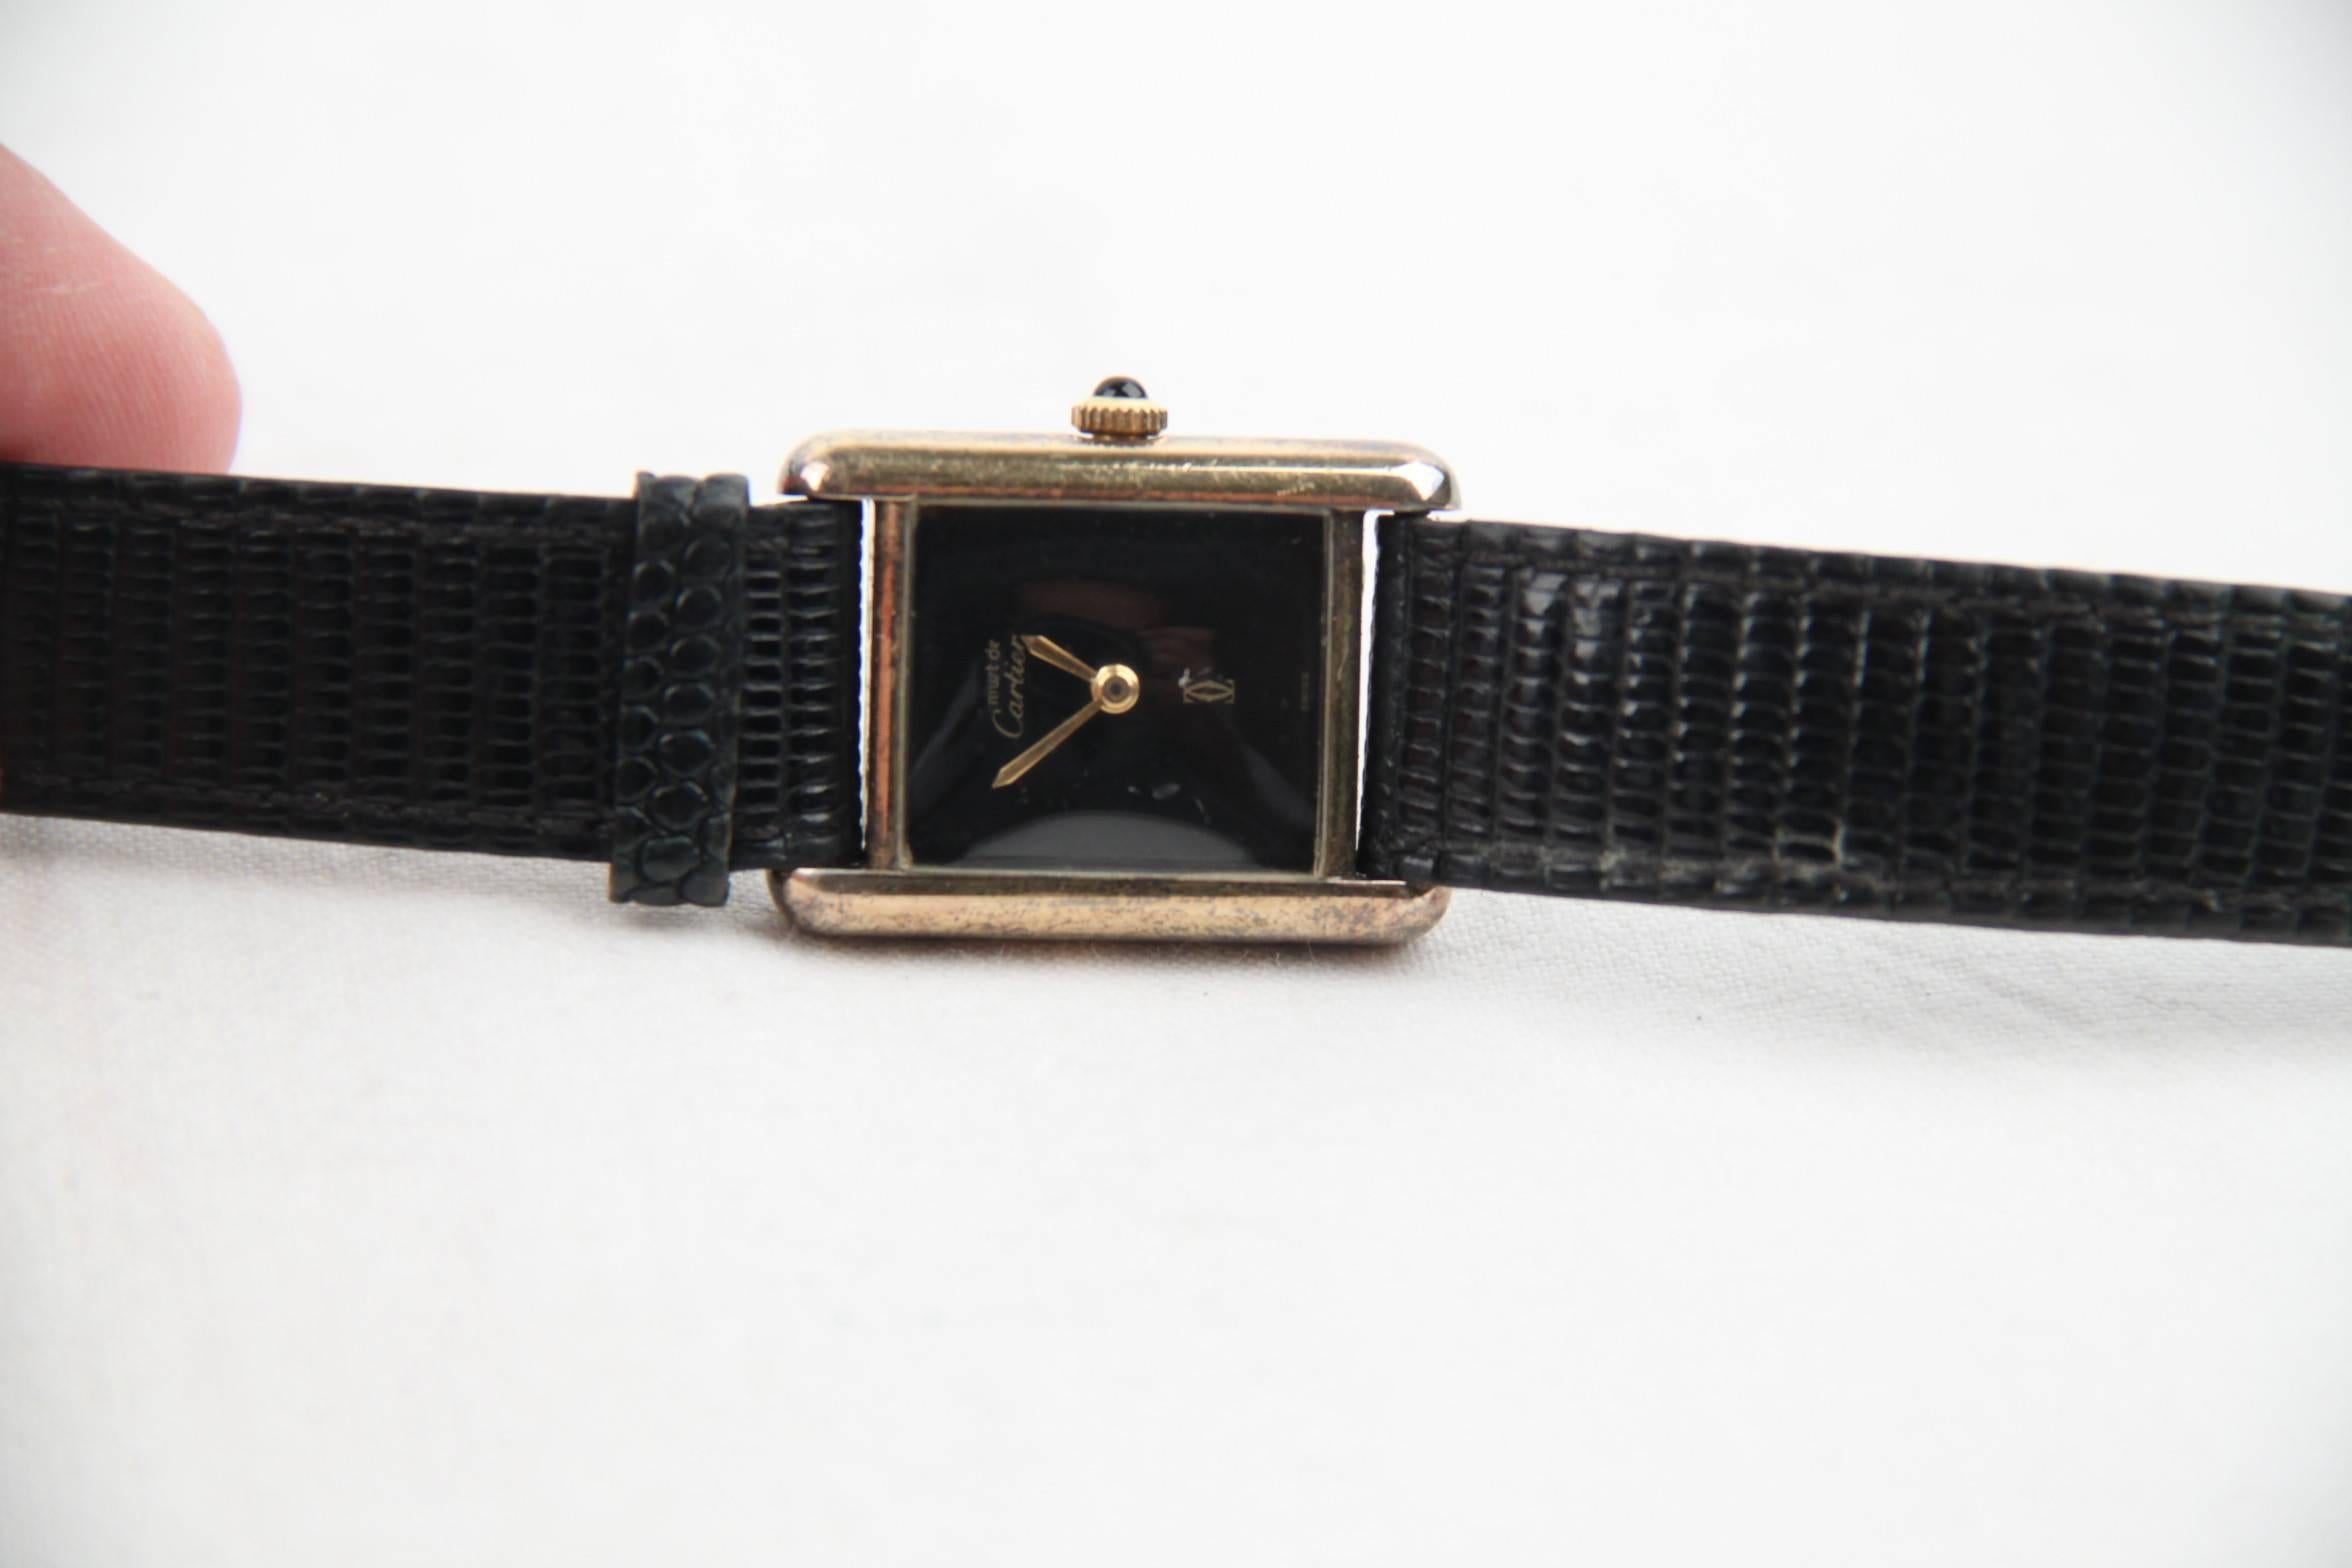 - Black dial signed 'Must de Cartier - CC - Swiss'.
- Original golden hands
- Original 925 solid silver case, gold plated
- 'Argent plaque OR G 20M, Cartier, Paris, #3 015088, Swiss' engraved on the reverse of the watch
- Black lizard skin